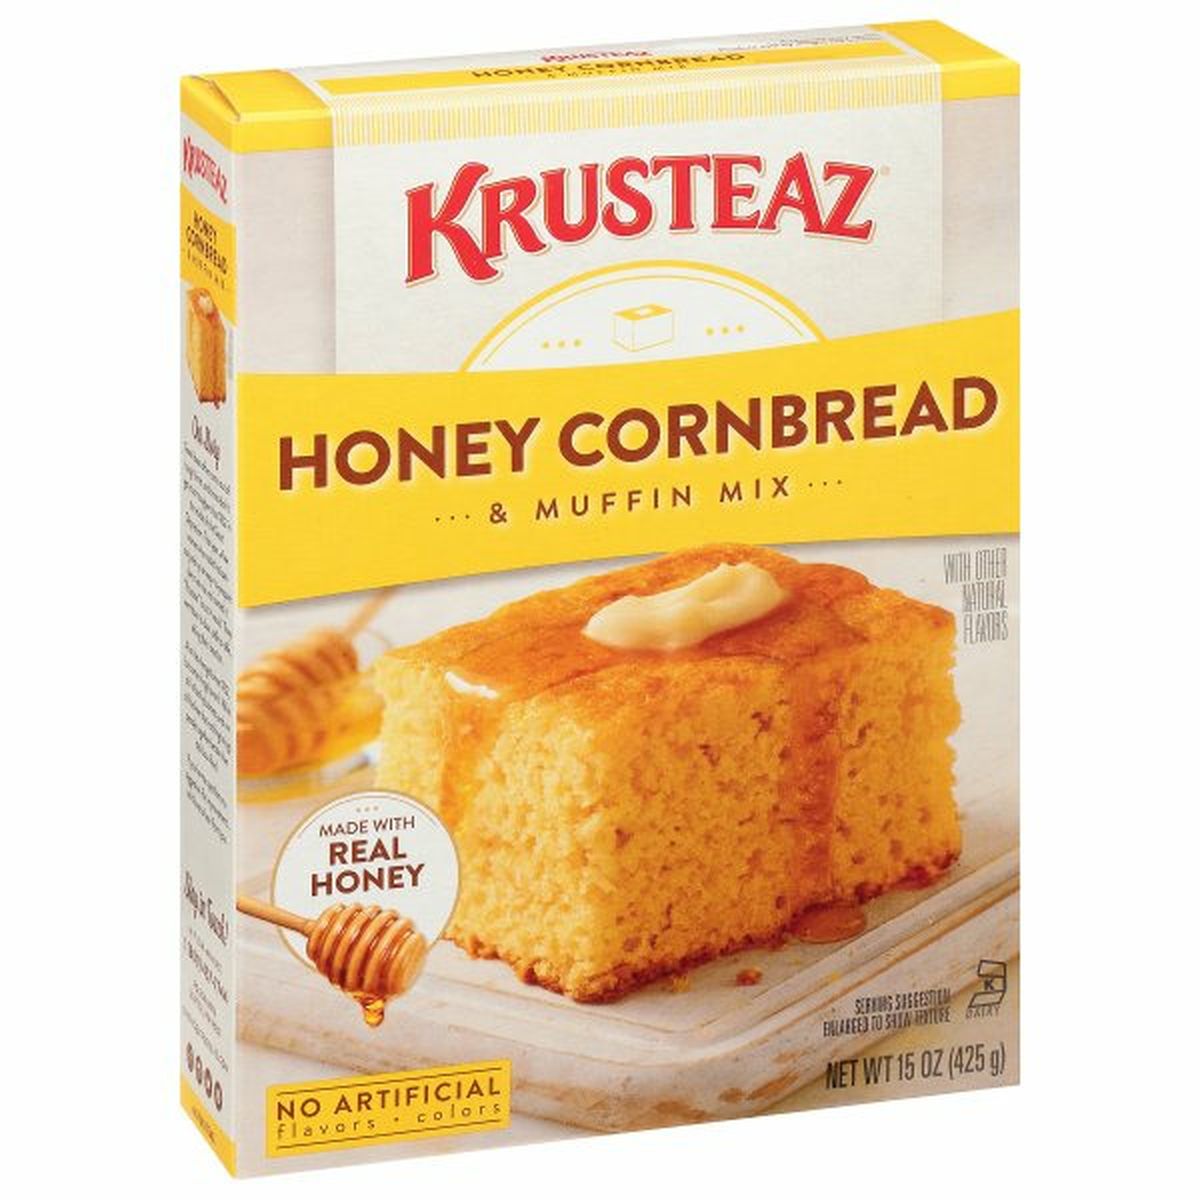 Calories in Krusteaz Cornbread & Muffin Mix, Honey